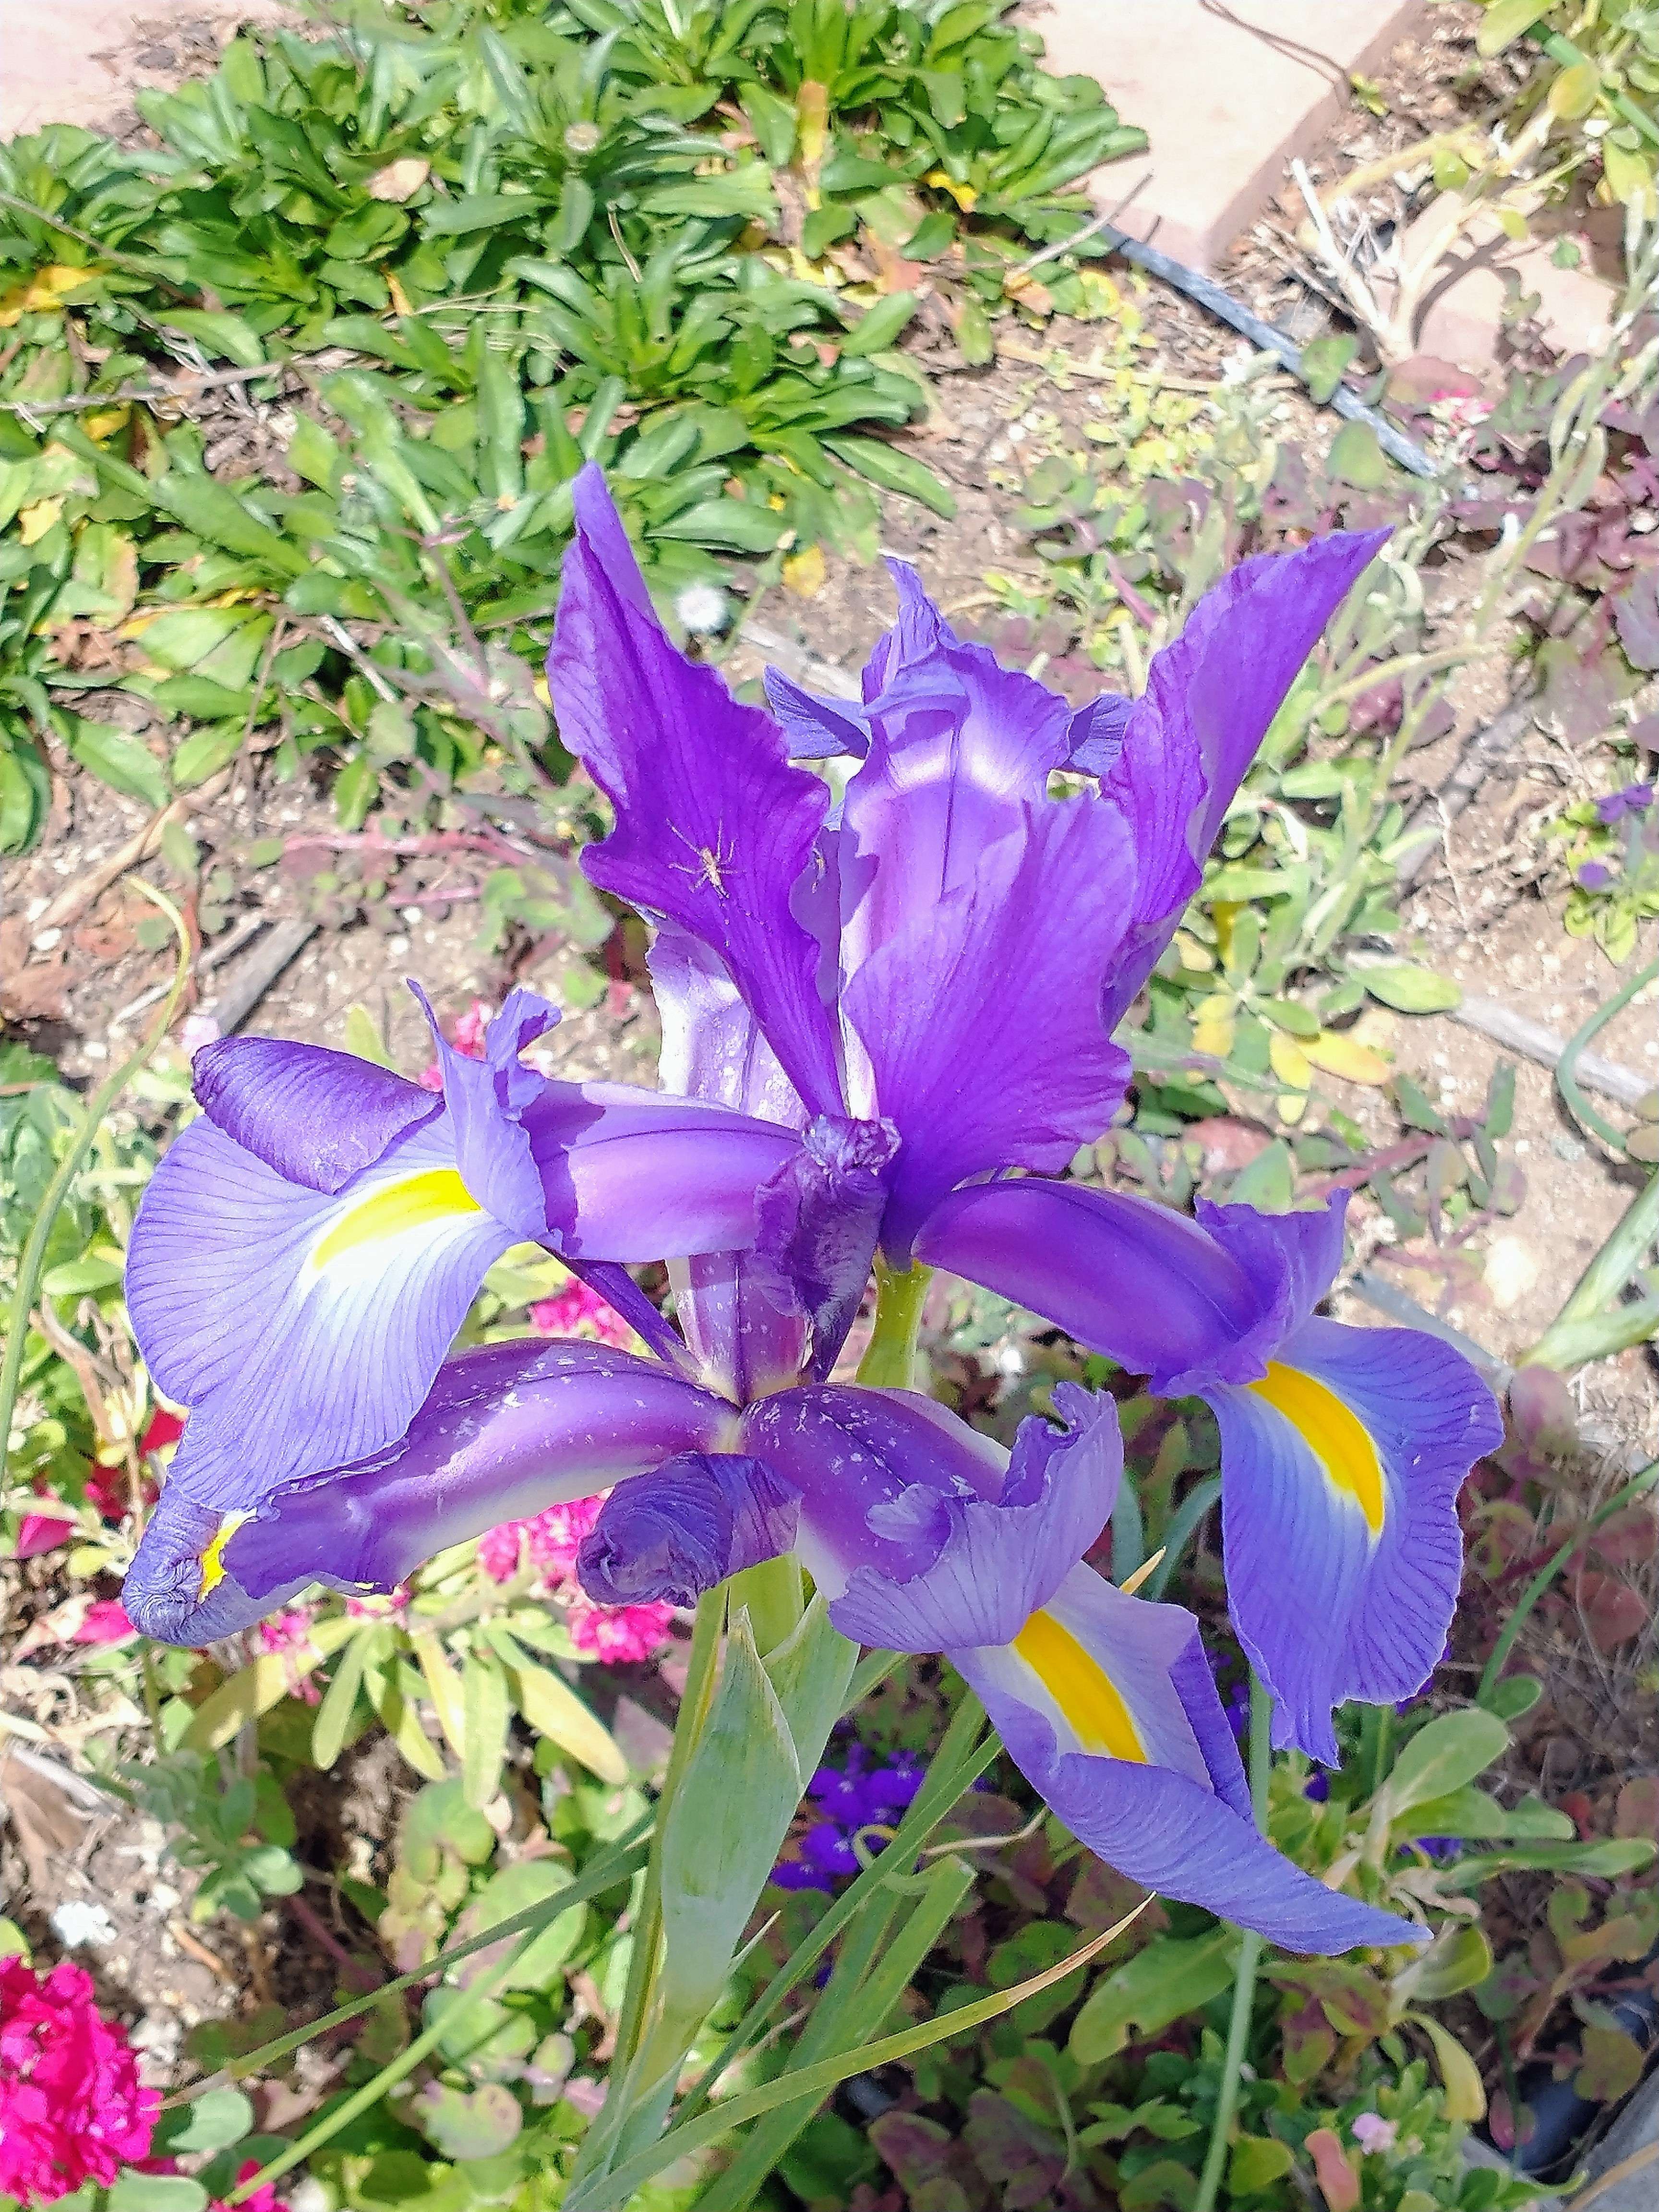 Iris bloom